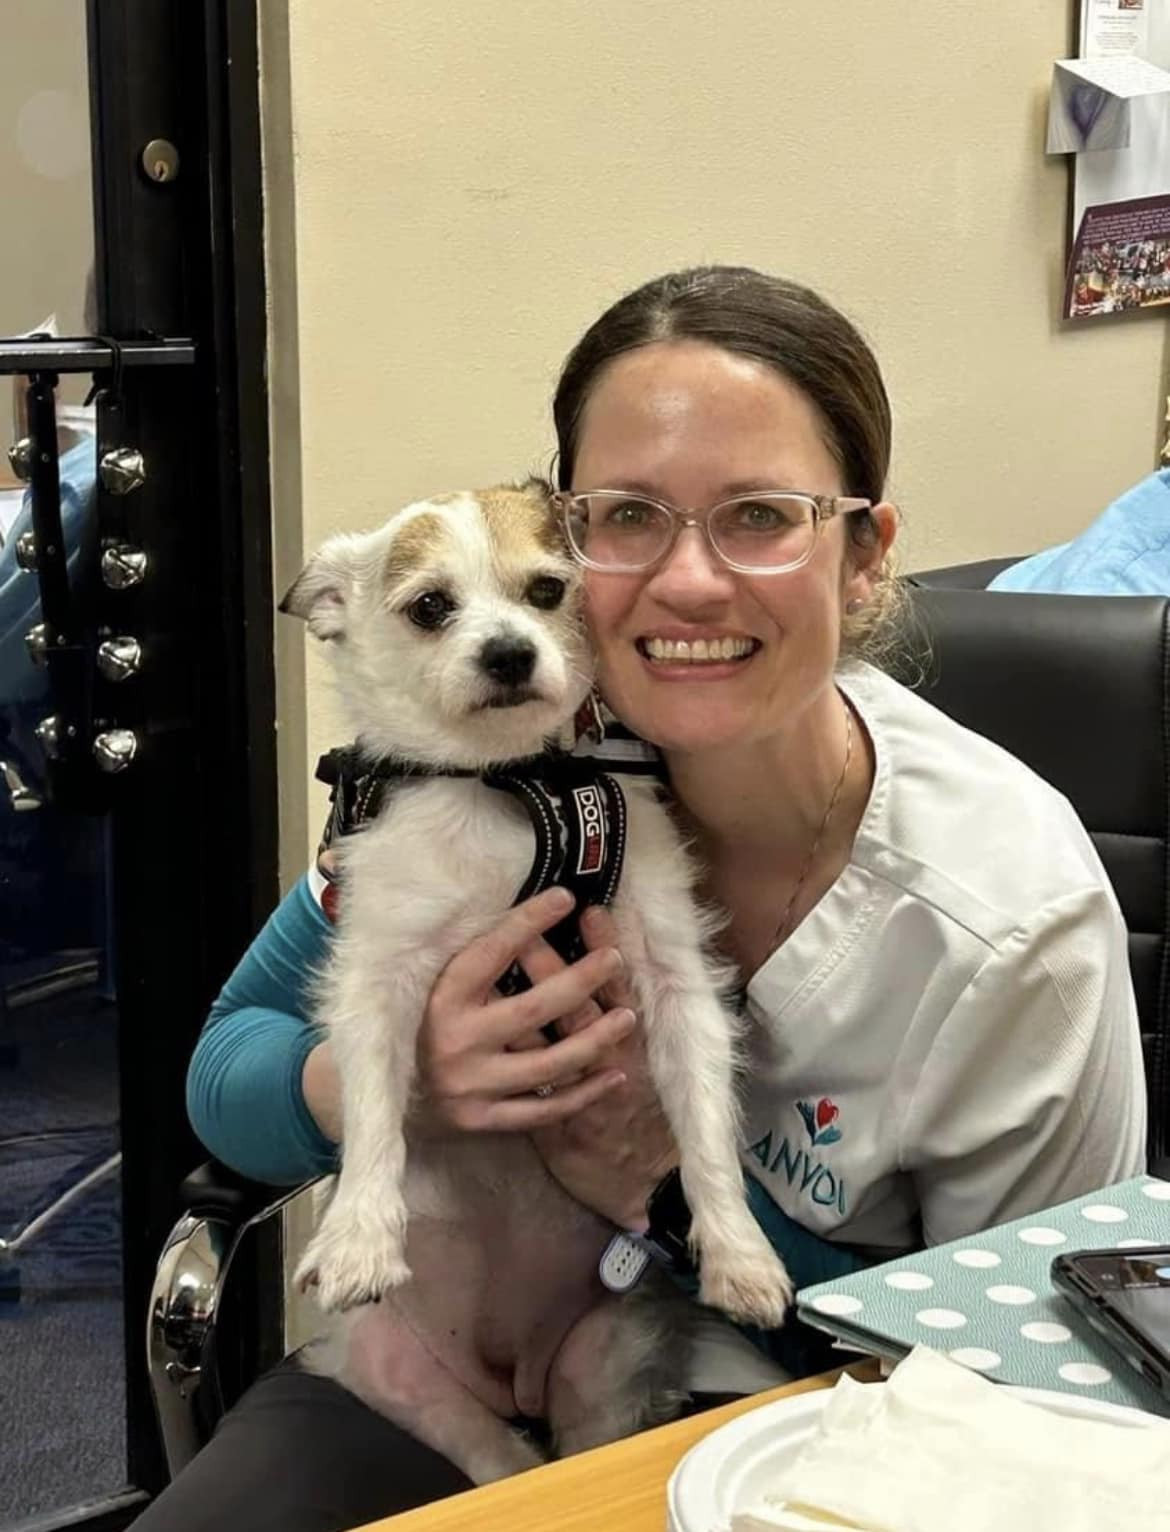 hospice nurse holding small dog